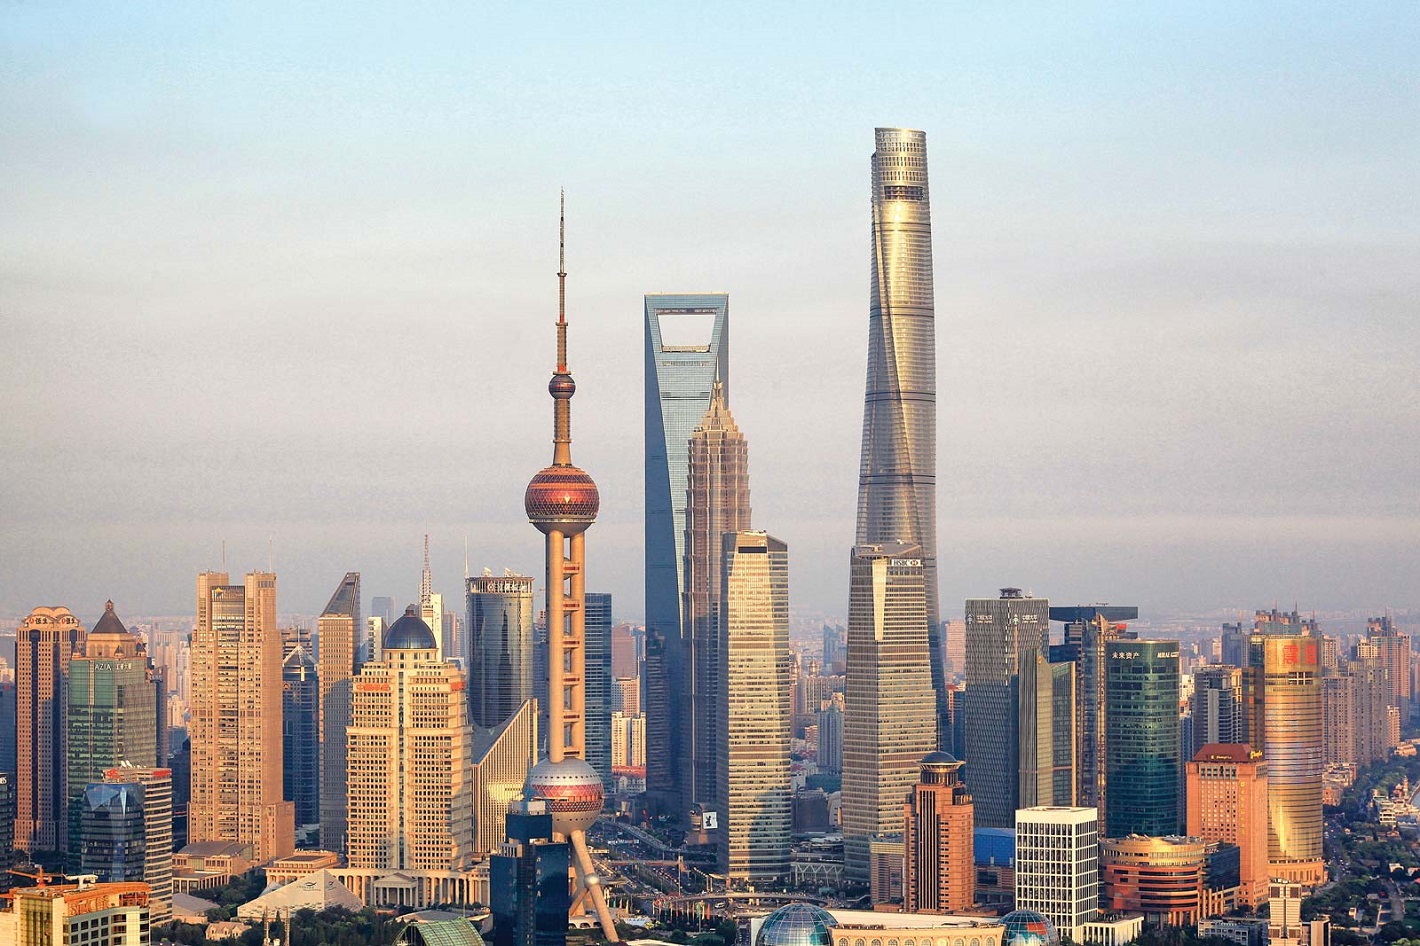 images/Shanghai-Tower-Gensler-San-Francisco-world-Oriental-2015.jpg